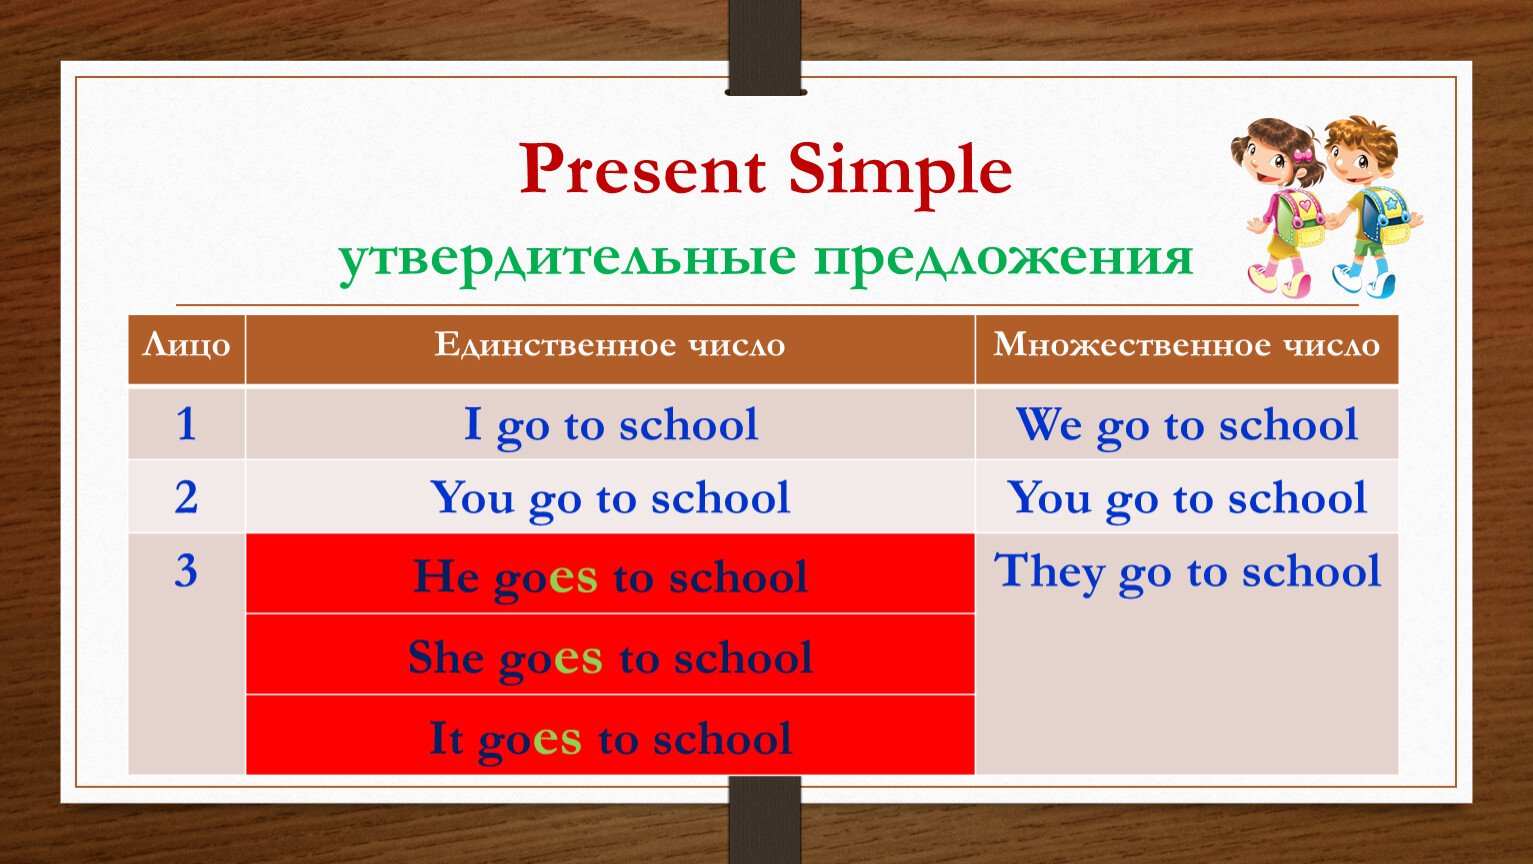 Leave в present simple. Презент Симпл. Present simple в английском языке. Present simple утвердительные. Презент Симпл утвердительные предложения.